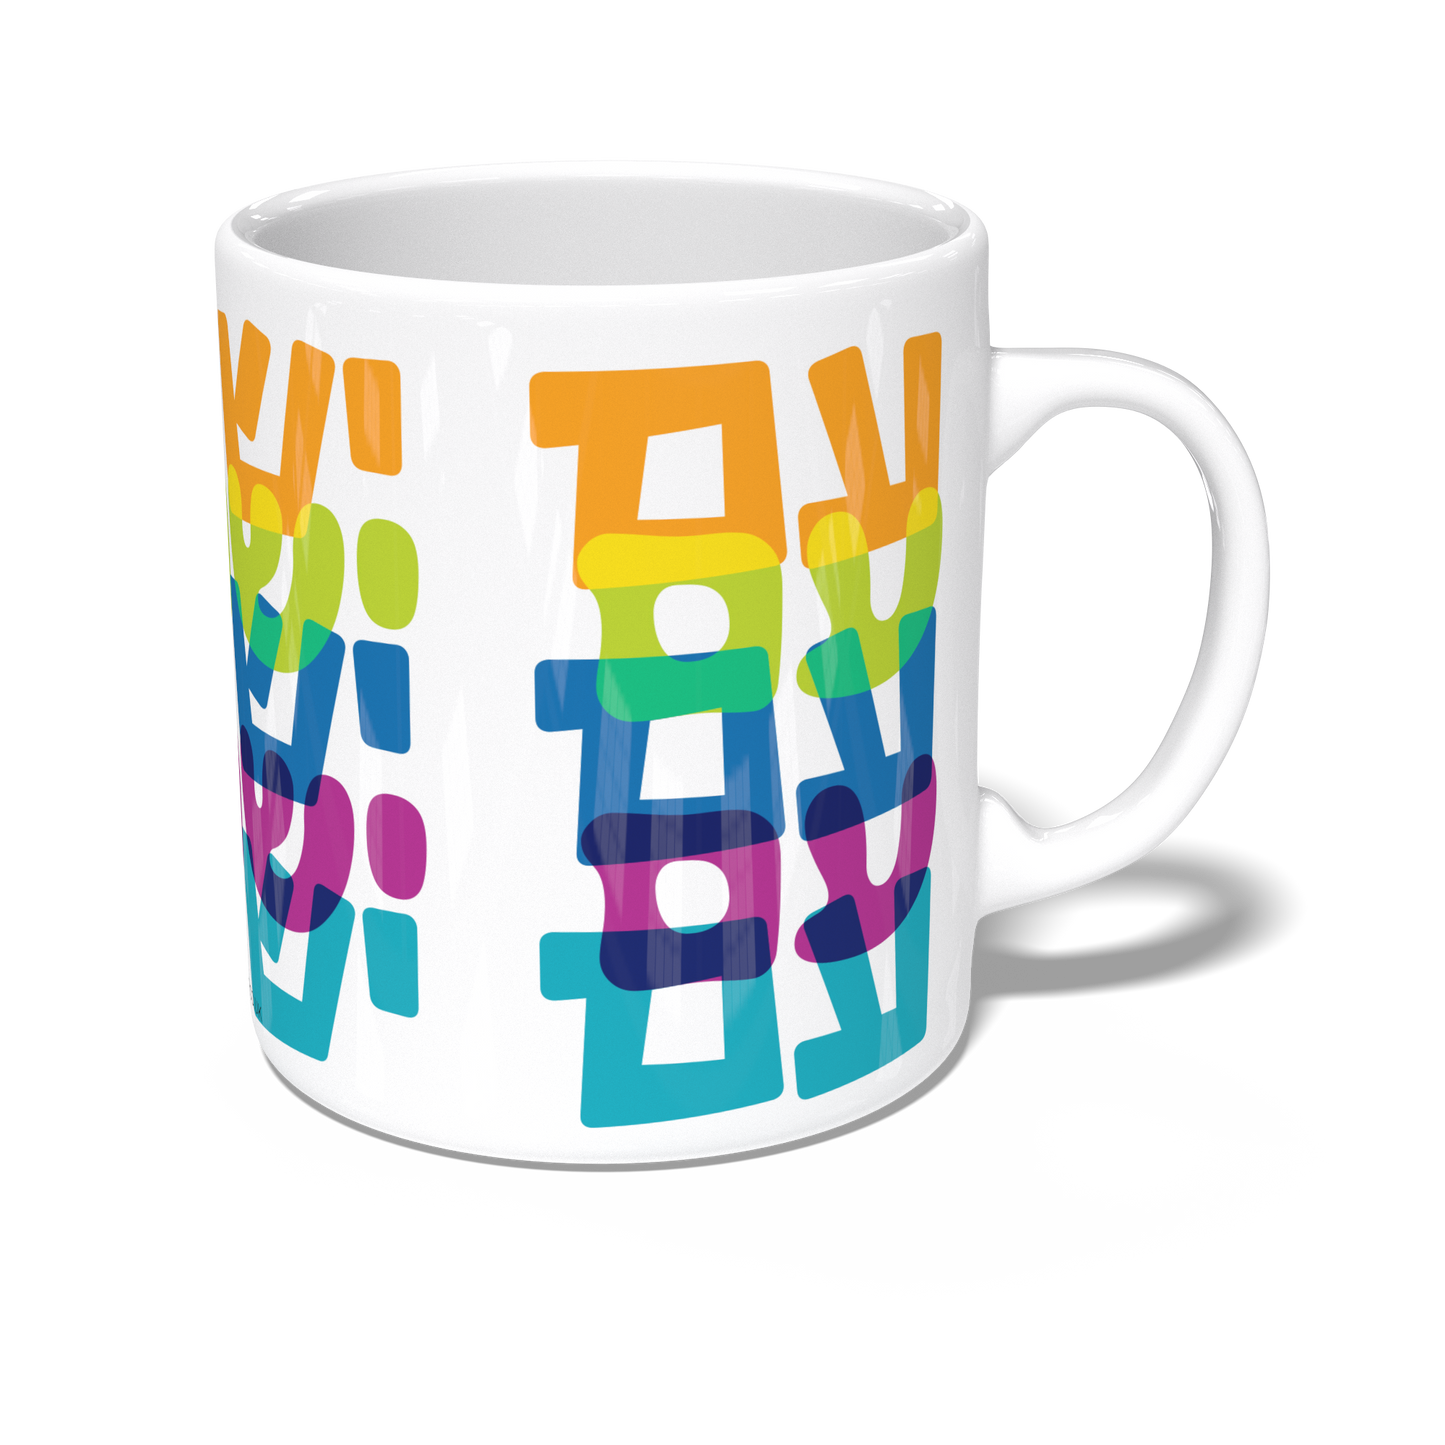 Am Yisrael Chai mug